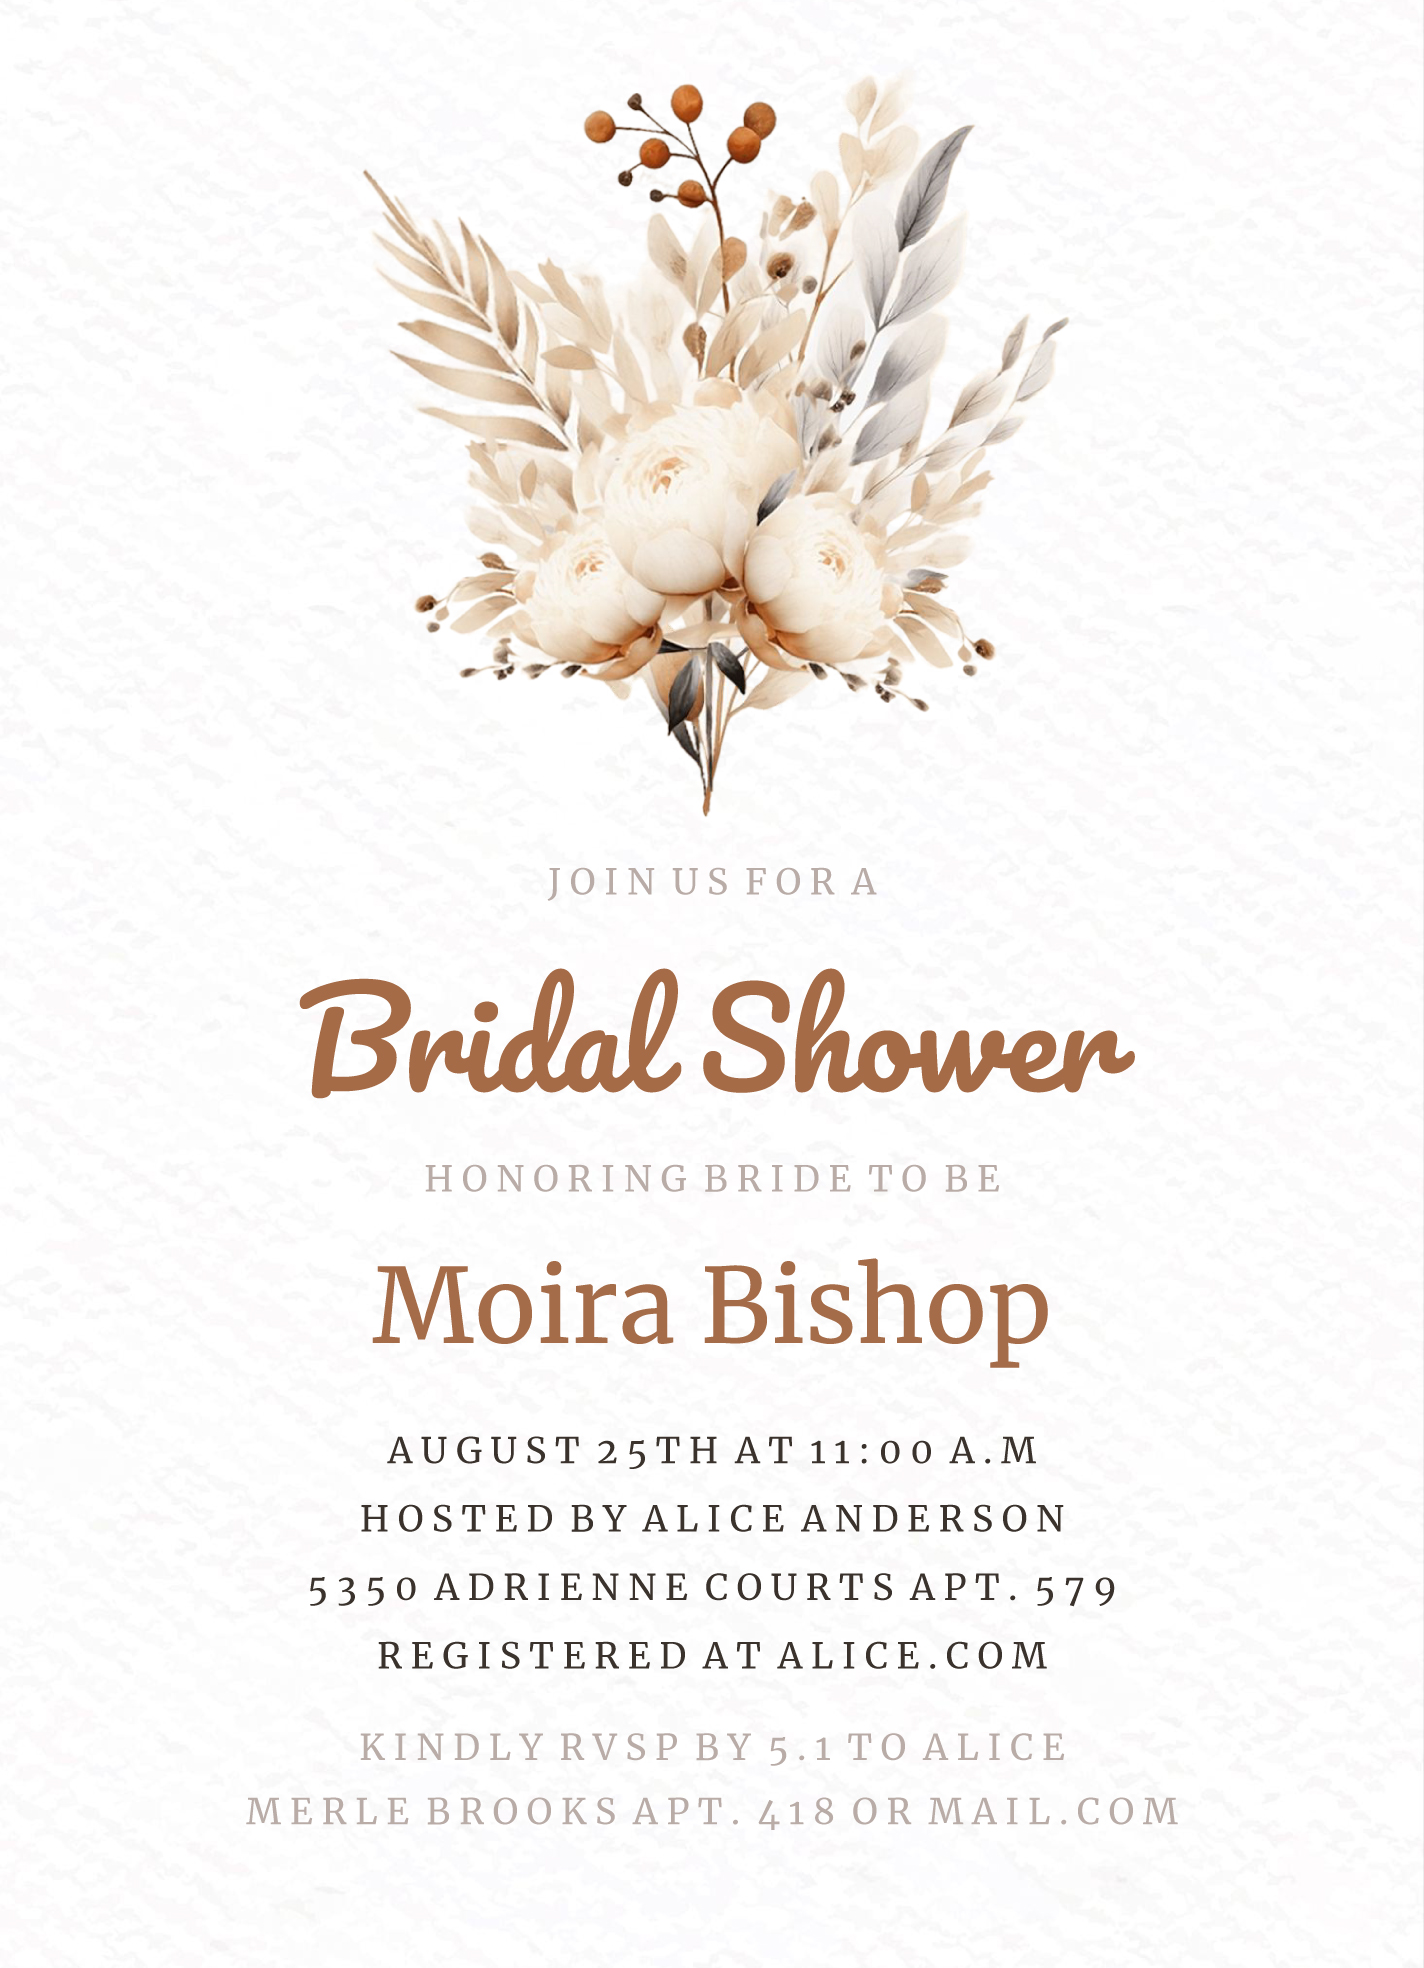 Bride To Be Wedding Shower Invitation